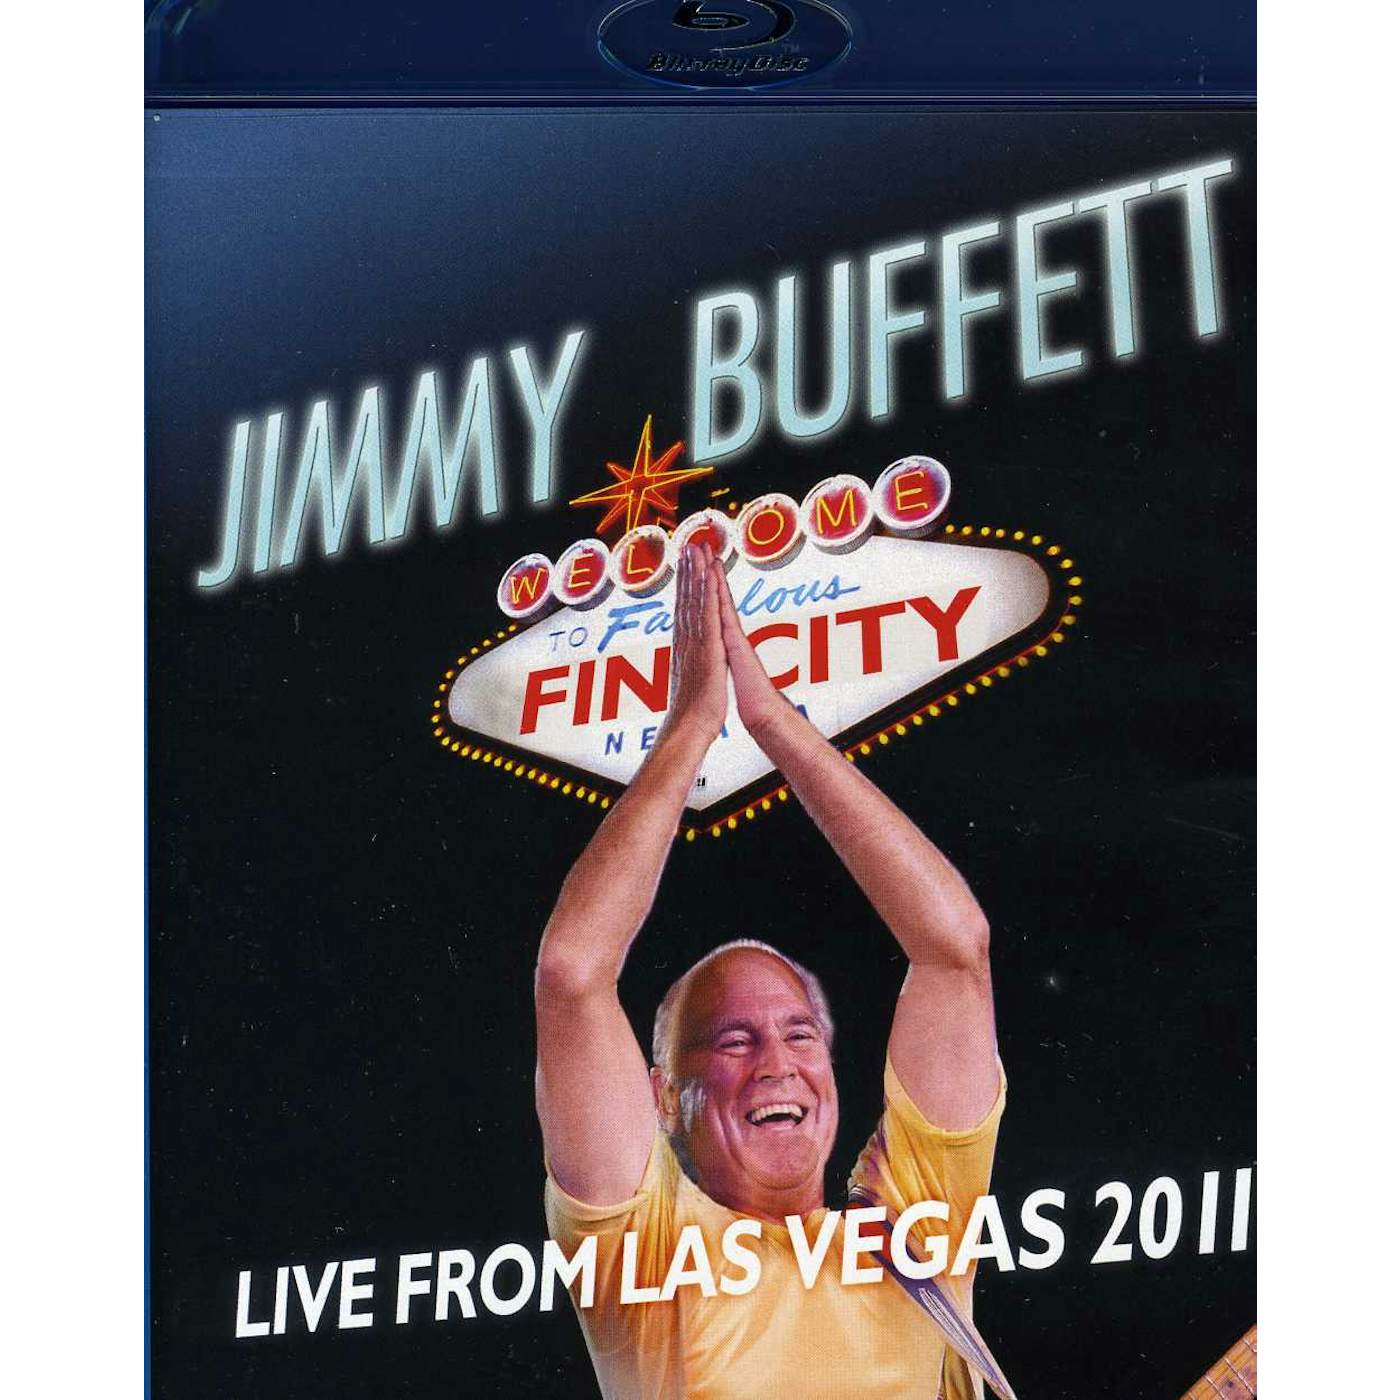 Jimmy Buffett WELCOME TO FIN CITY CD